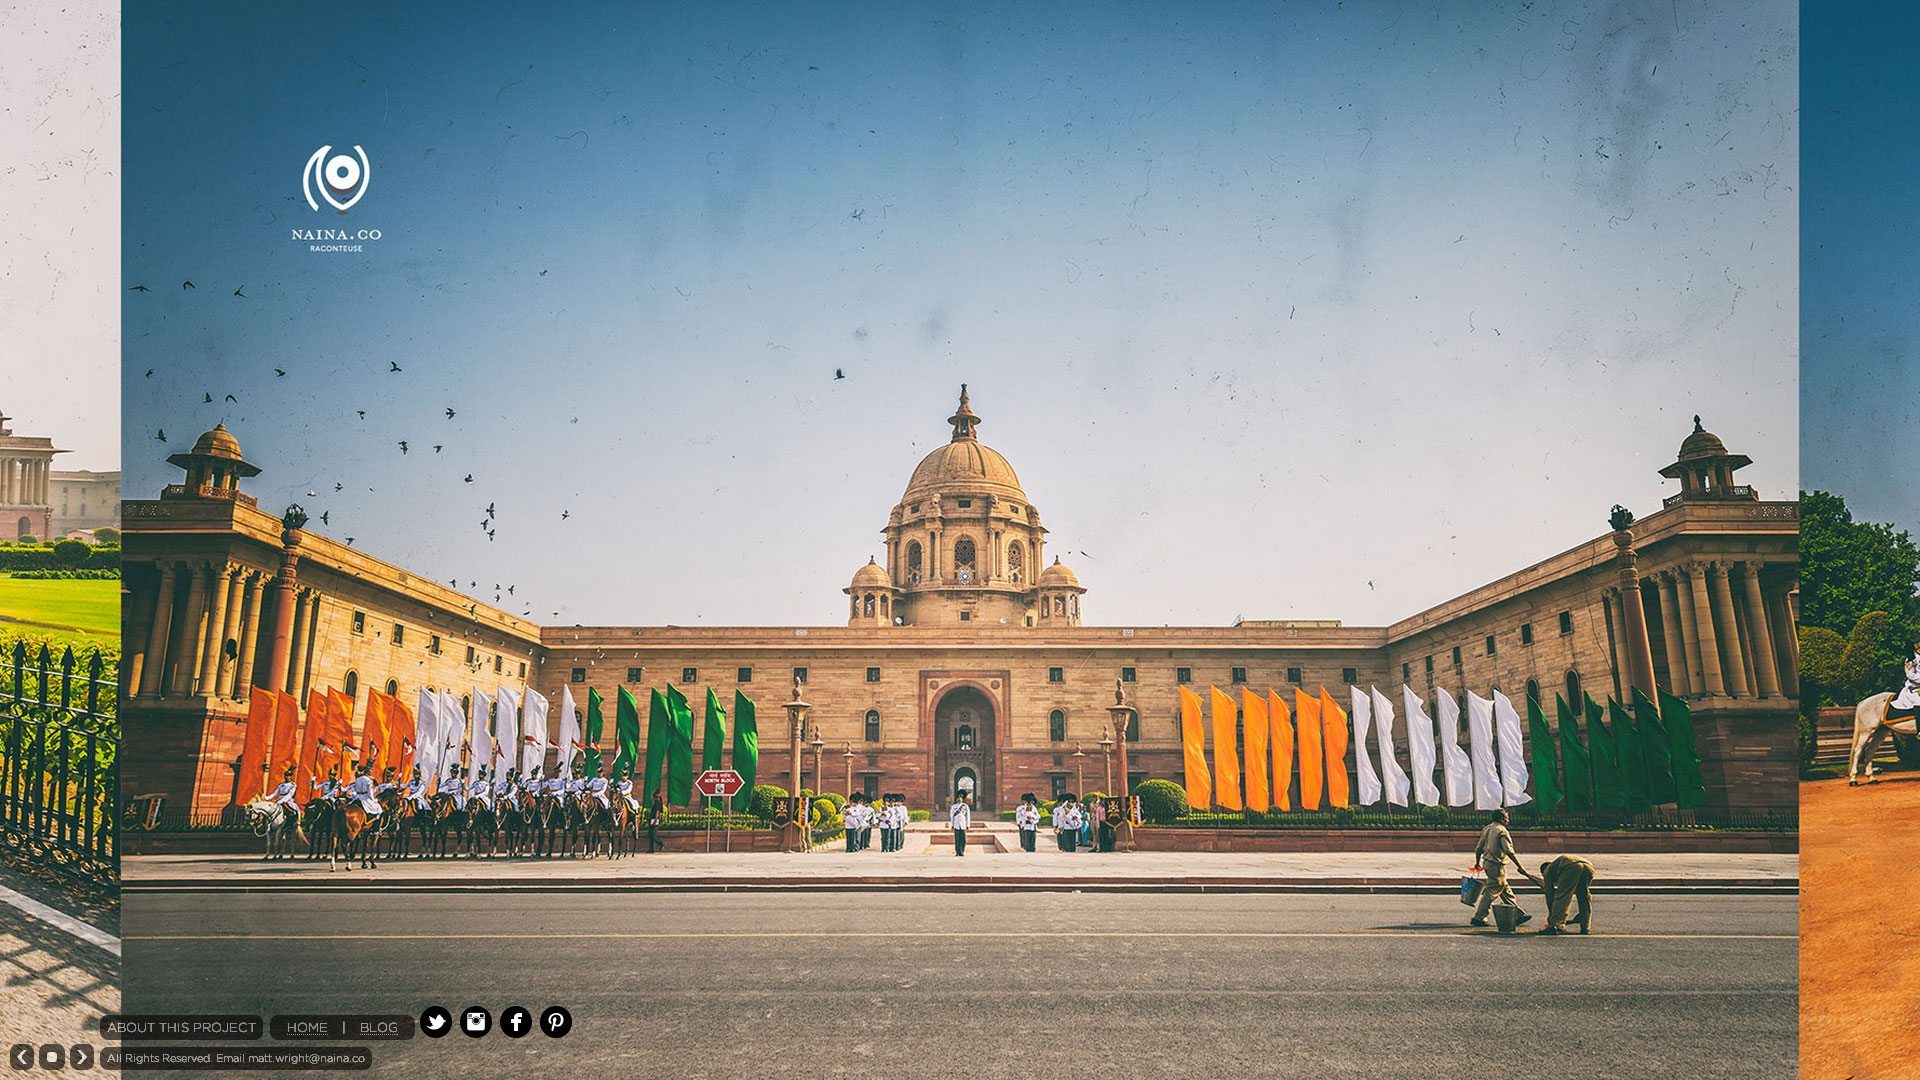 Rashtrapati-Bhavan-Presidential-Palace-India-New-Delhi-Government-Archival-Canvas-Prints-Photographer-Storyteller-Raconteuse-Naina.co